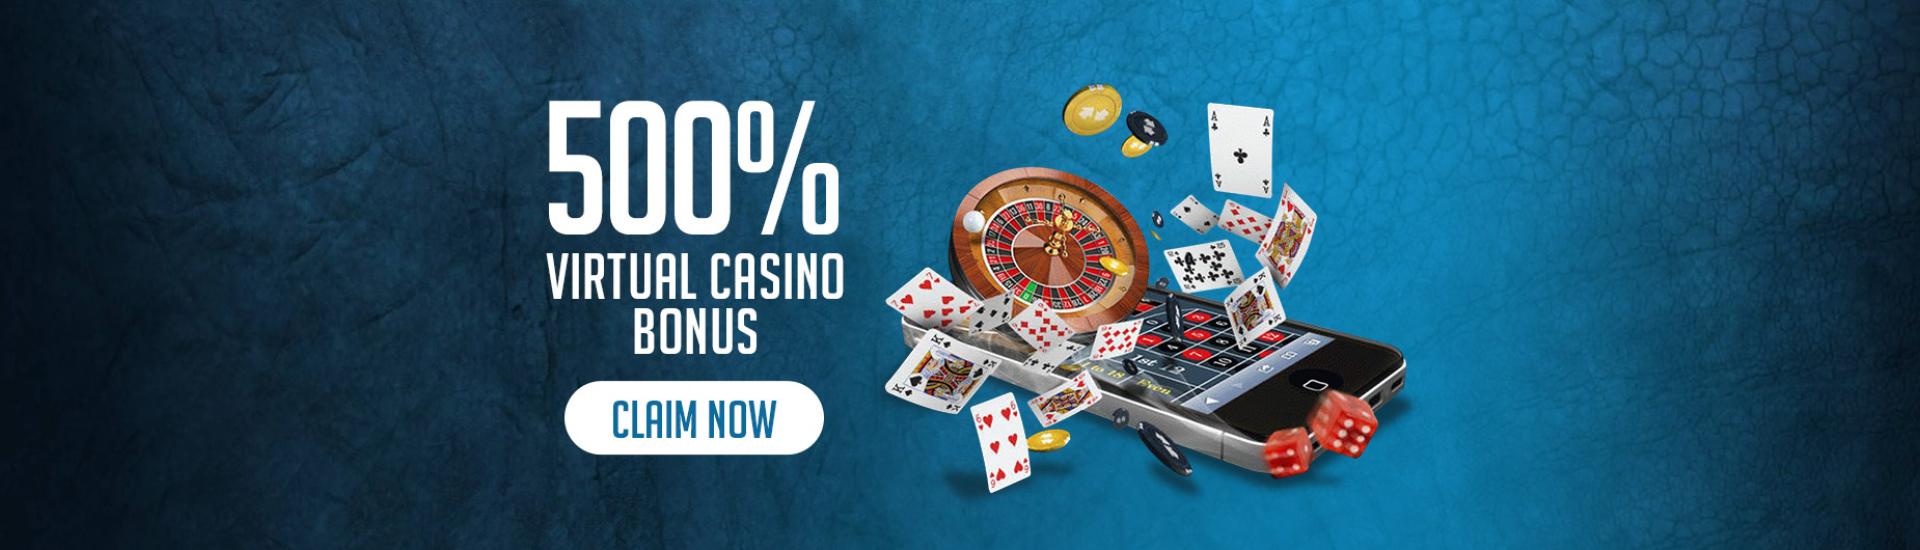 500% Virtual Casino Bonus